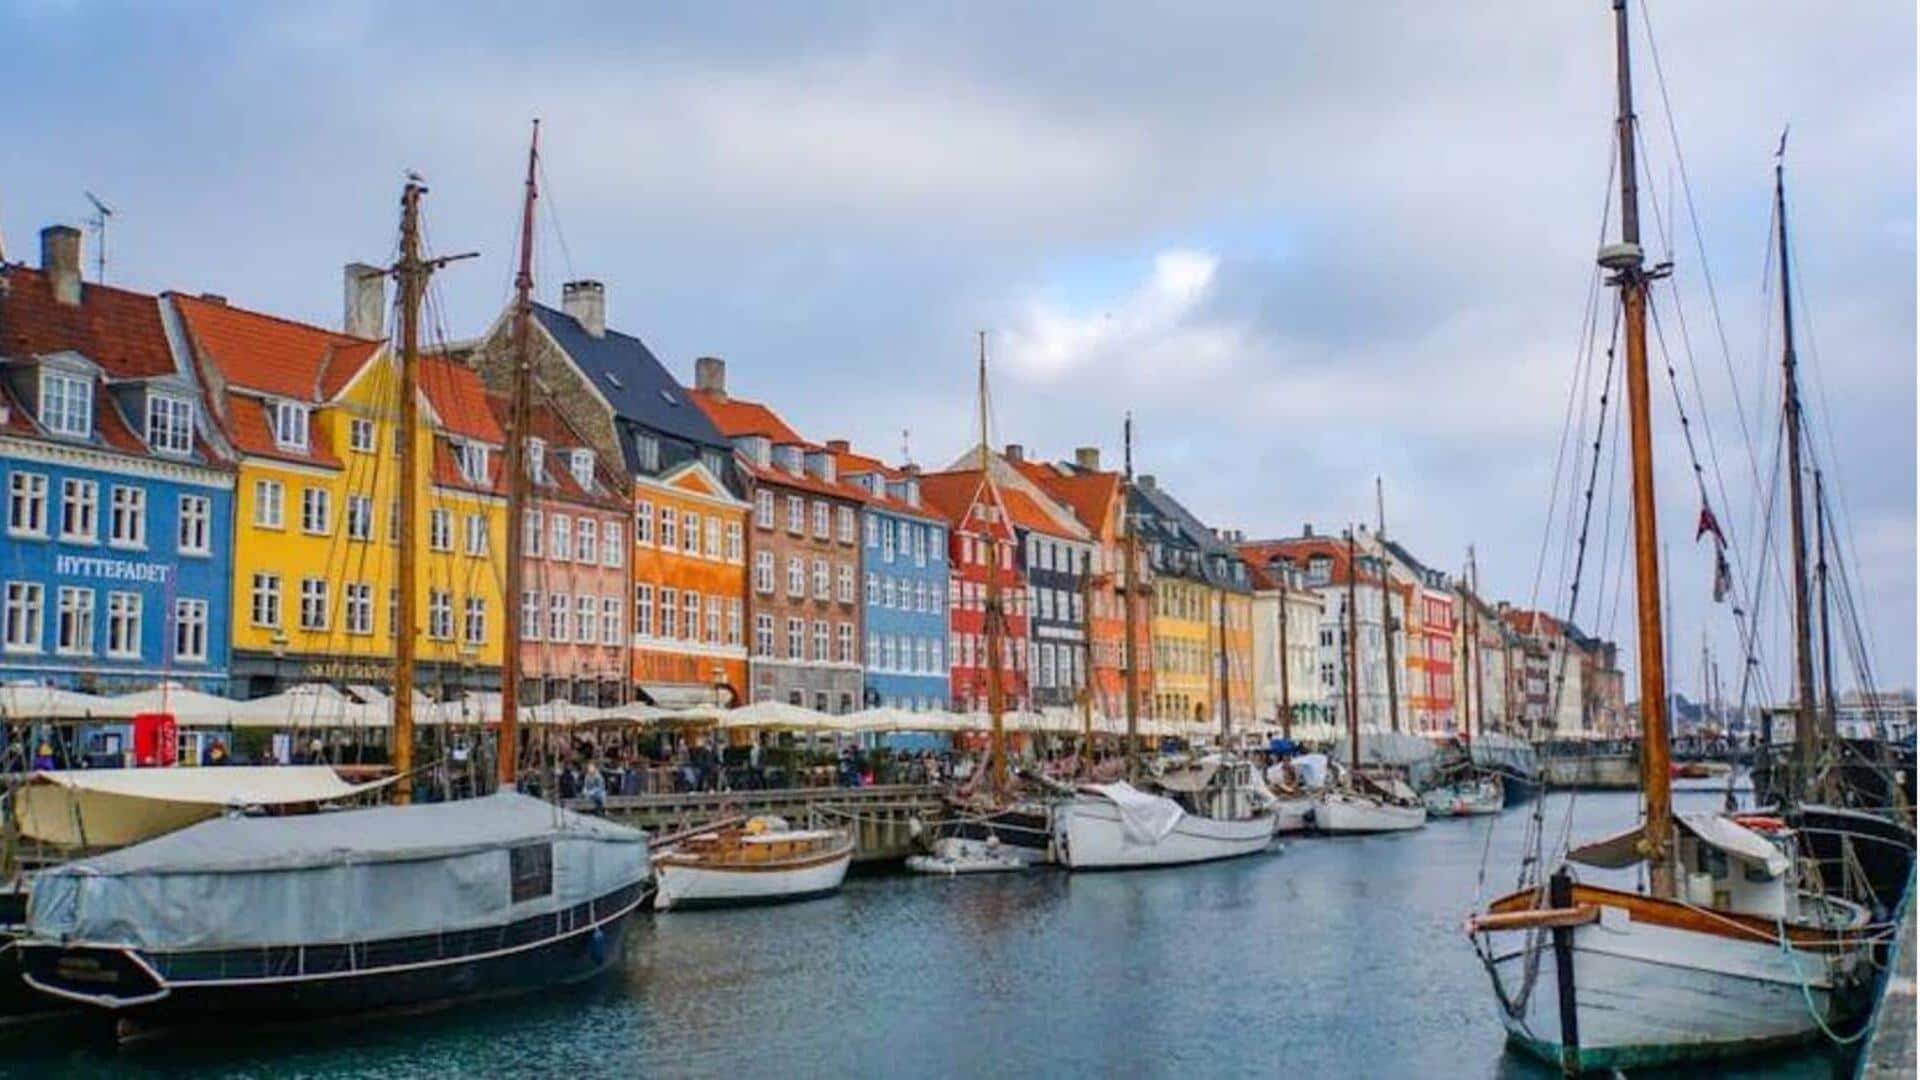 Temukan tempat-tempat memesona yang kurang dikenal di Kopenhagen